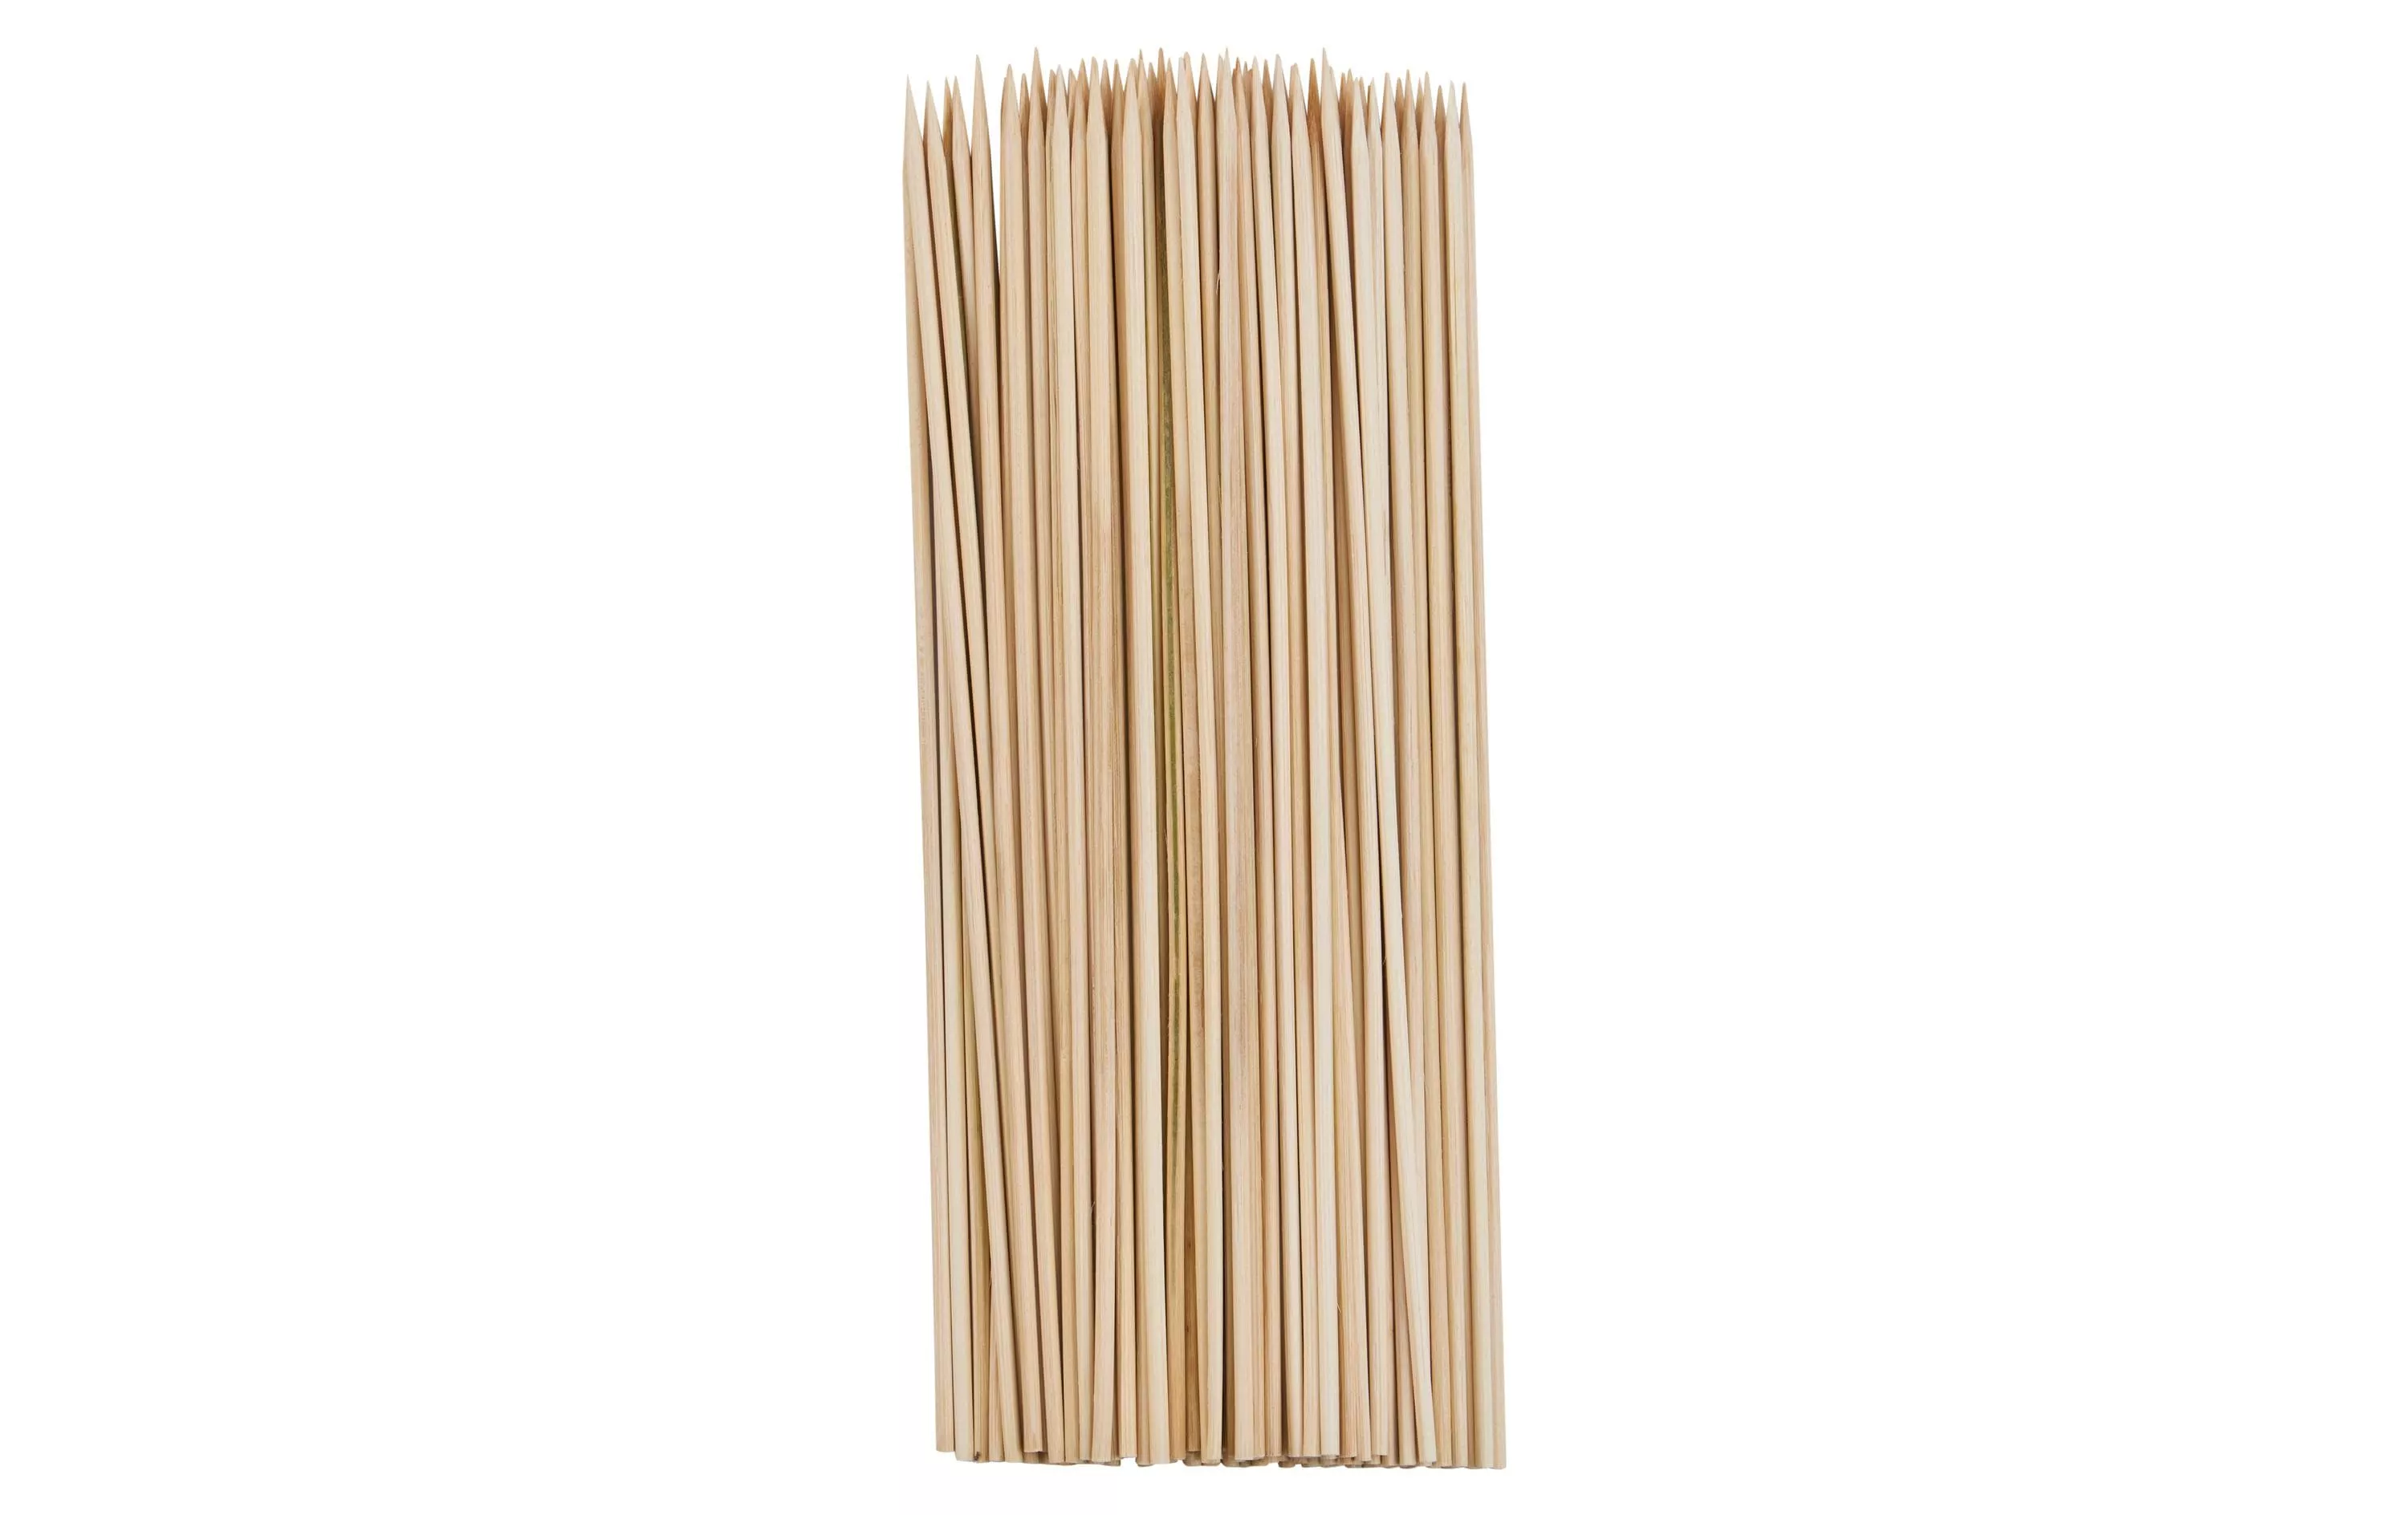 Grillspiess Bambus, 25 cm, 100 Stück